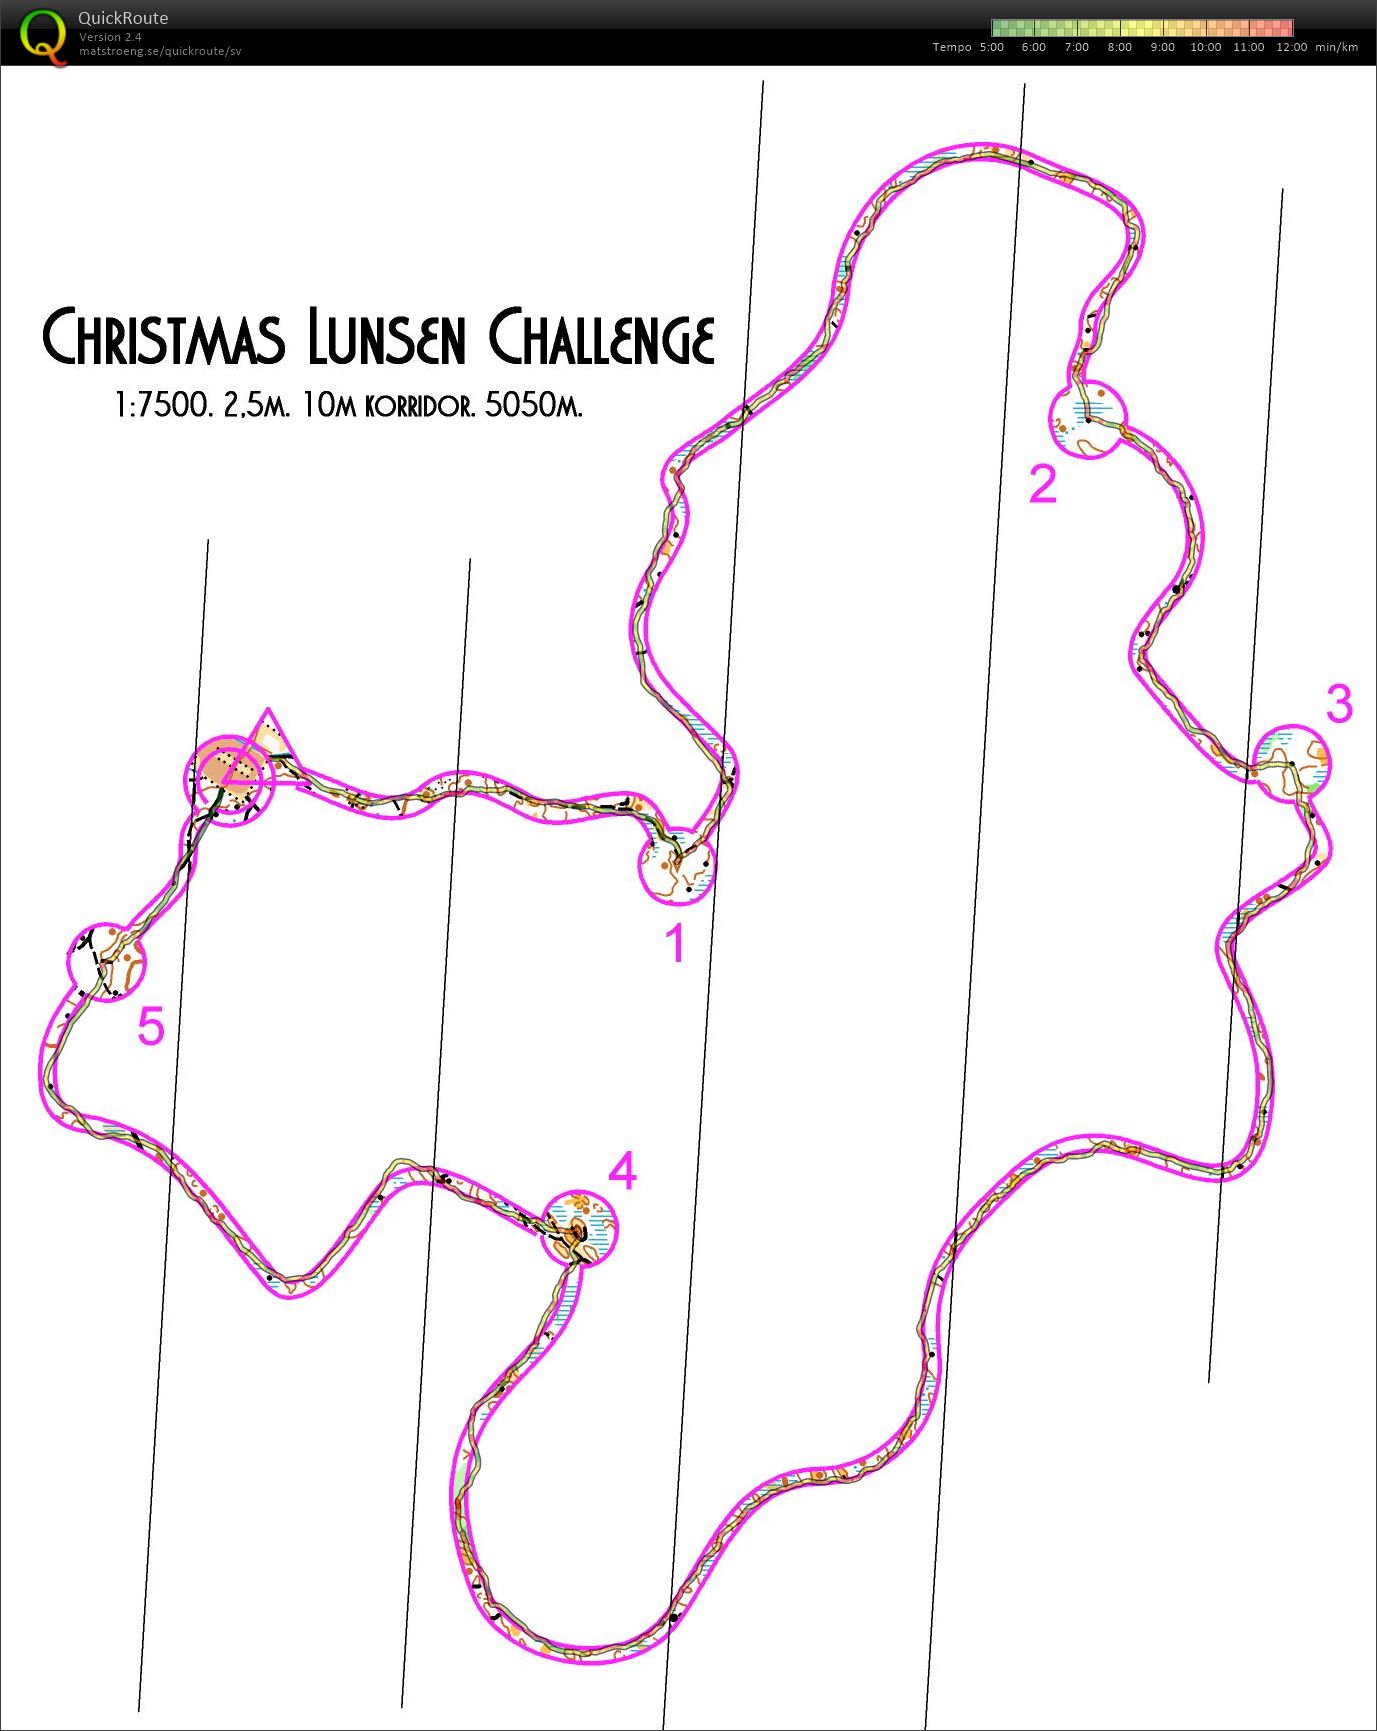 Christmas Lunsen Challenge (2016-12-24)